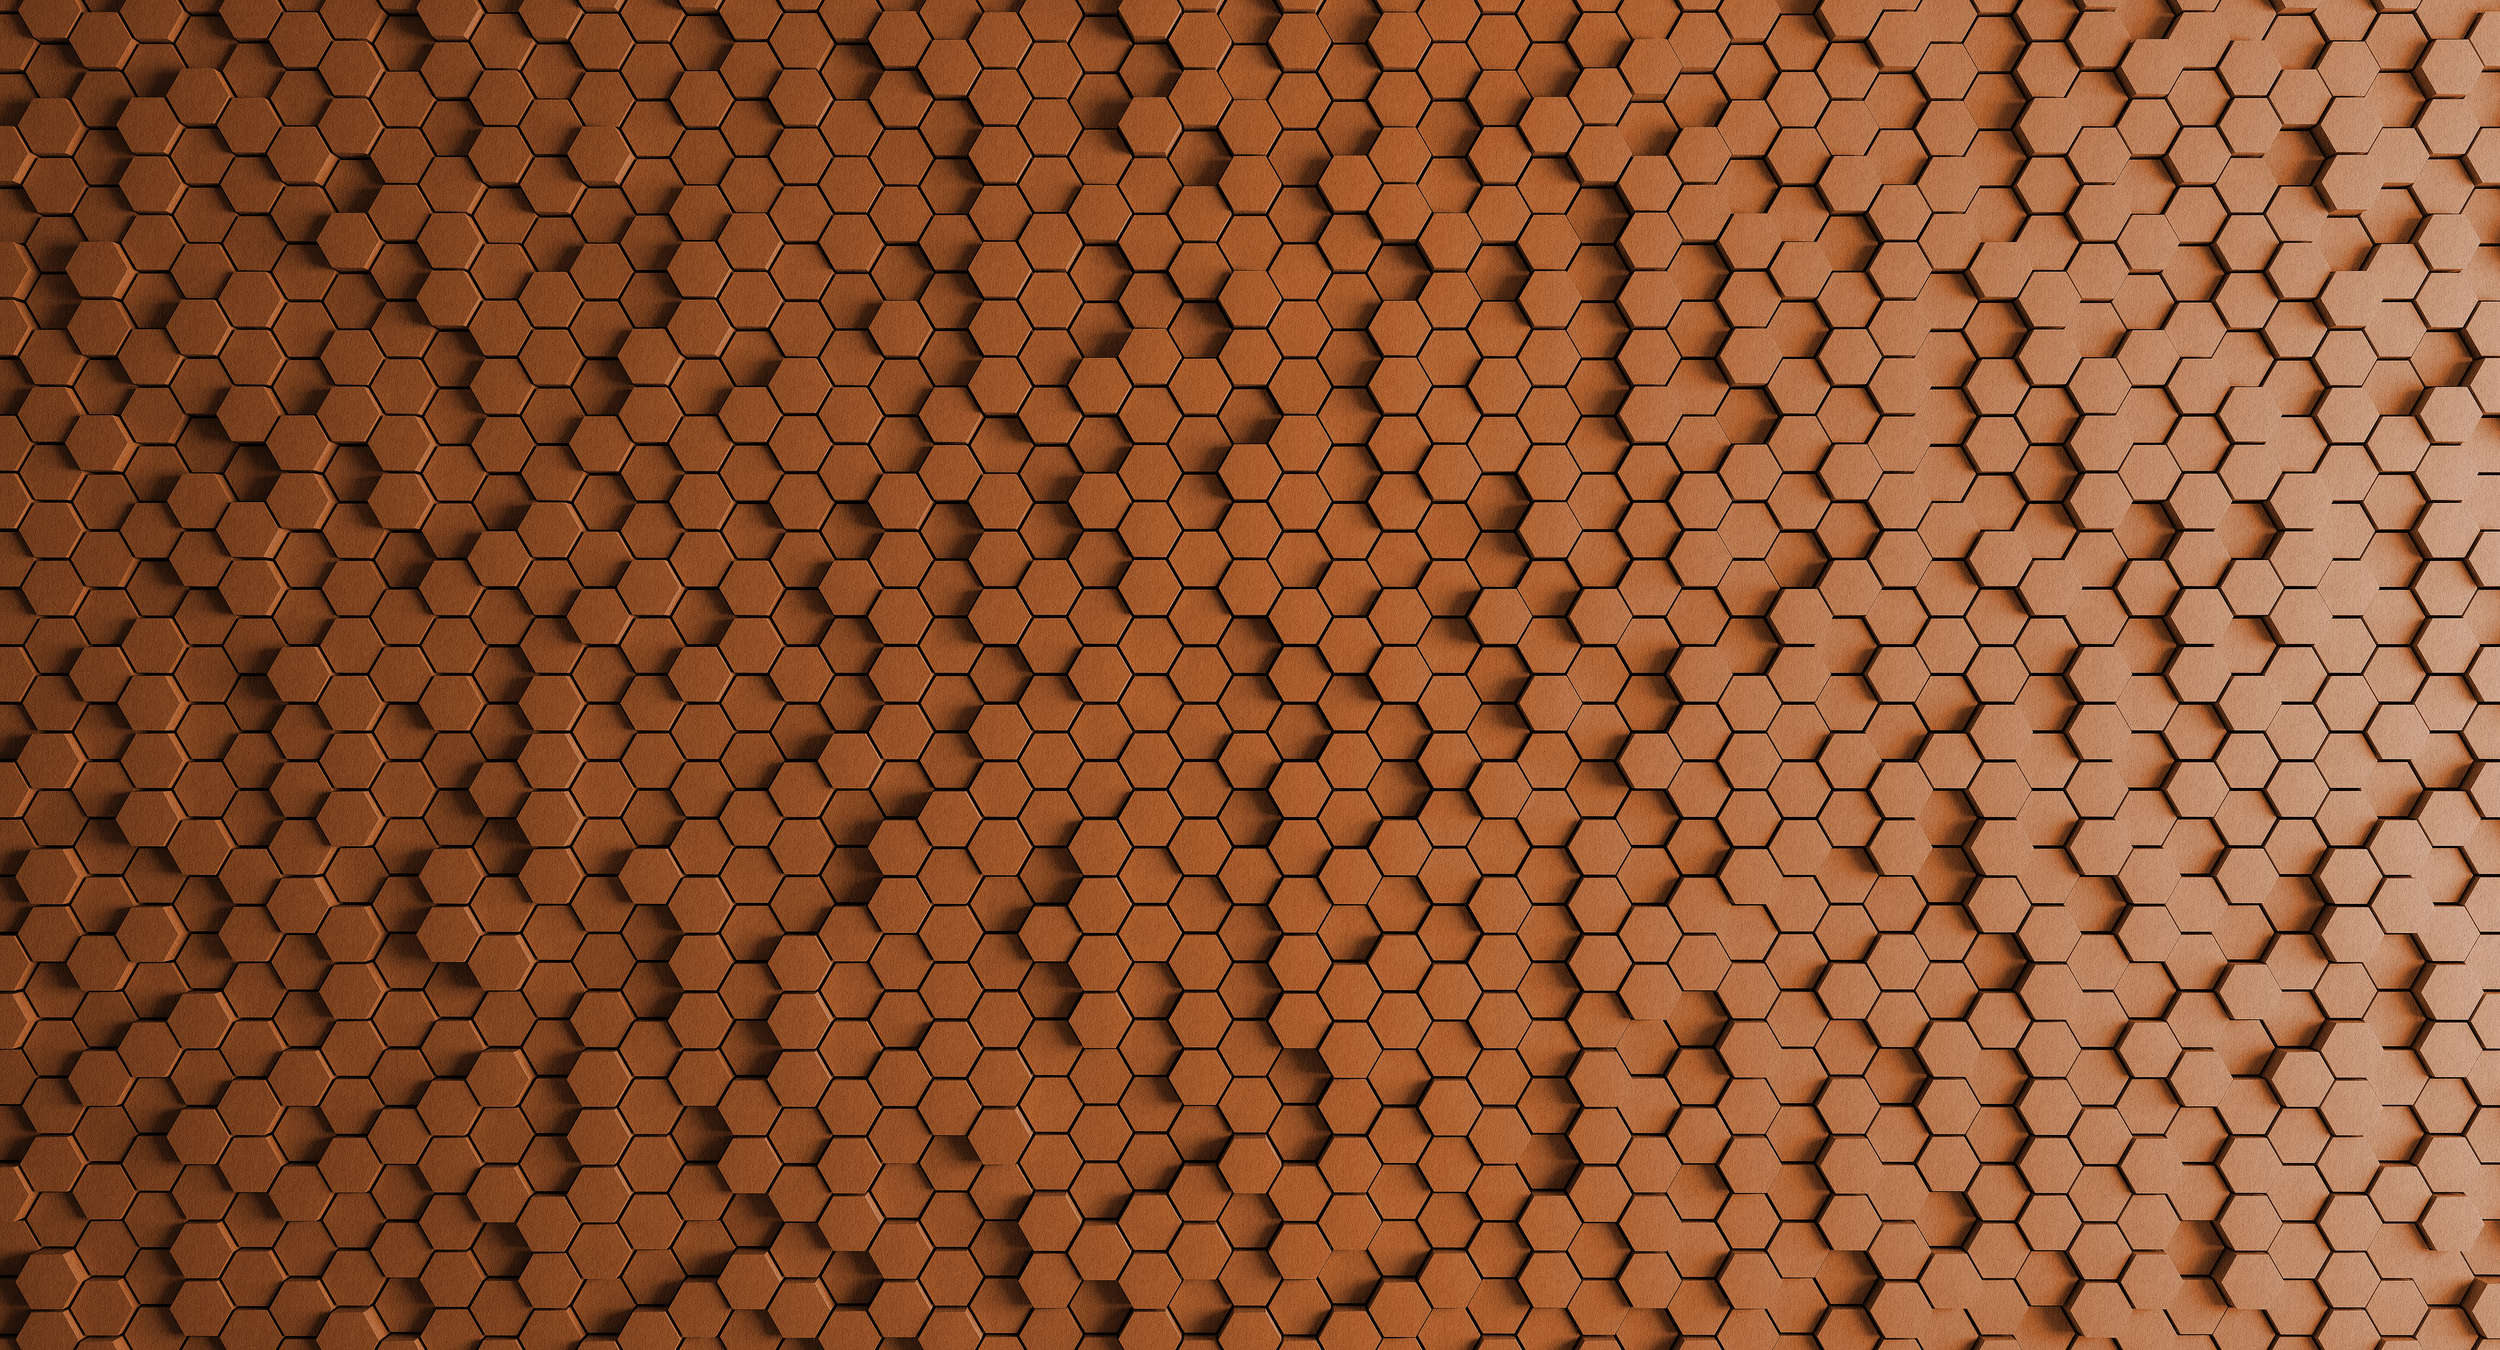             Honeycomb 2 - 3D wallpaper with orange honeycomb design - structure felt - copper, orange | premium smooth fleece
        